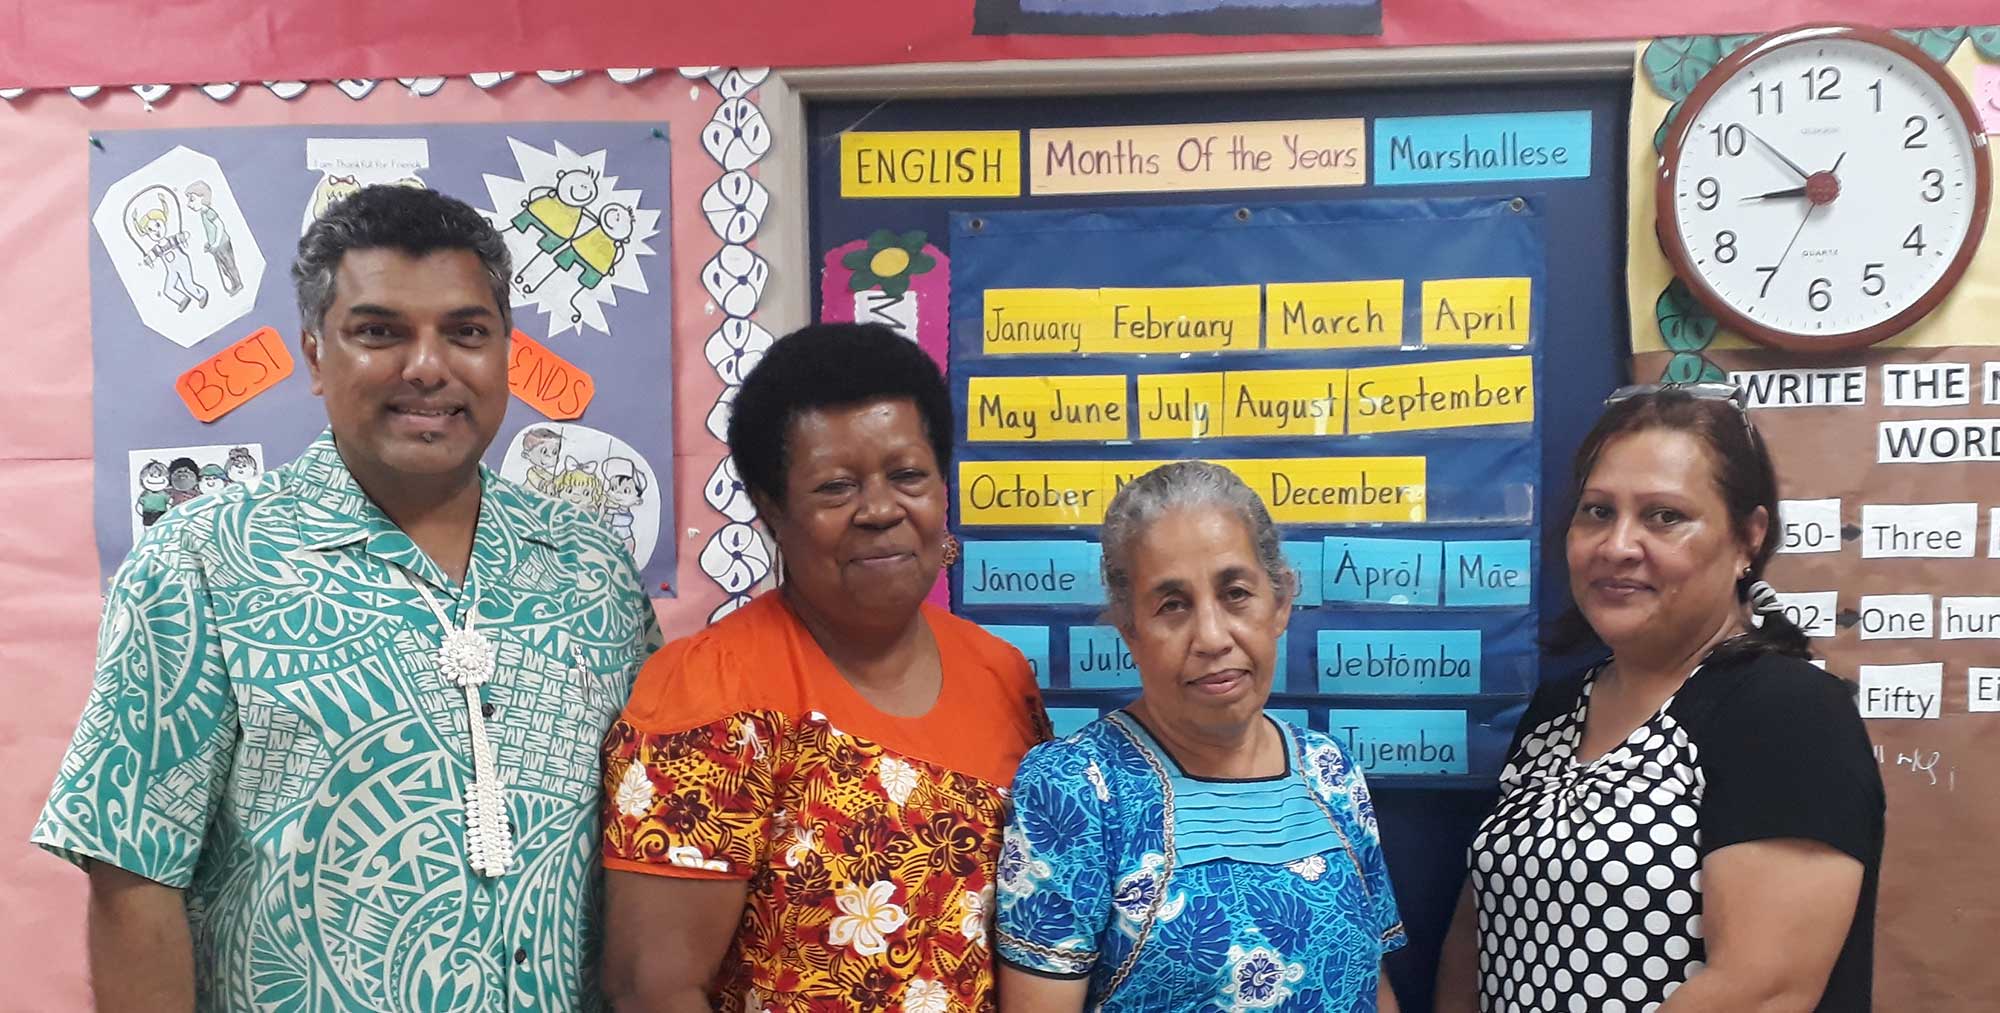 RRRT staff member Nilesh Goundar with representatives of the Marshall Islands Public School System